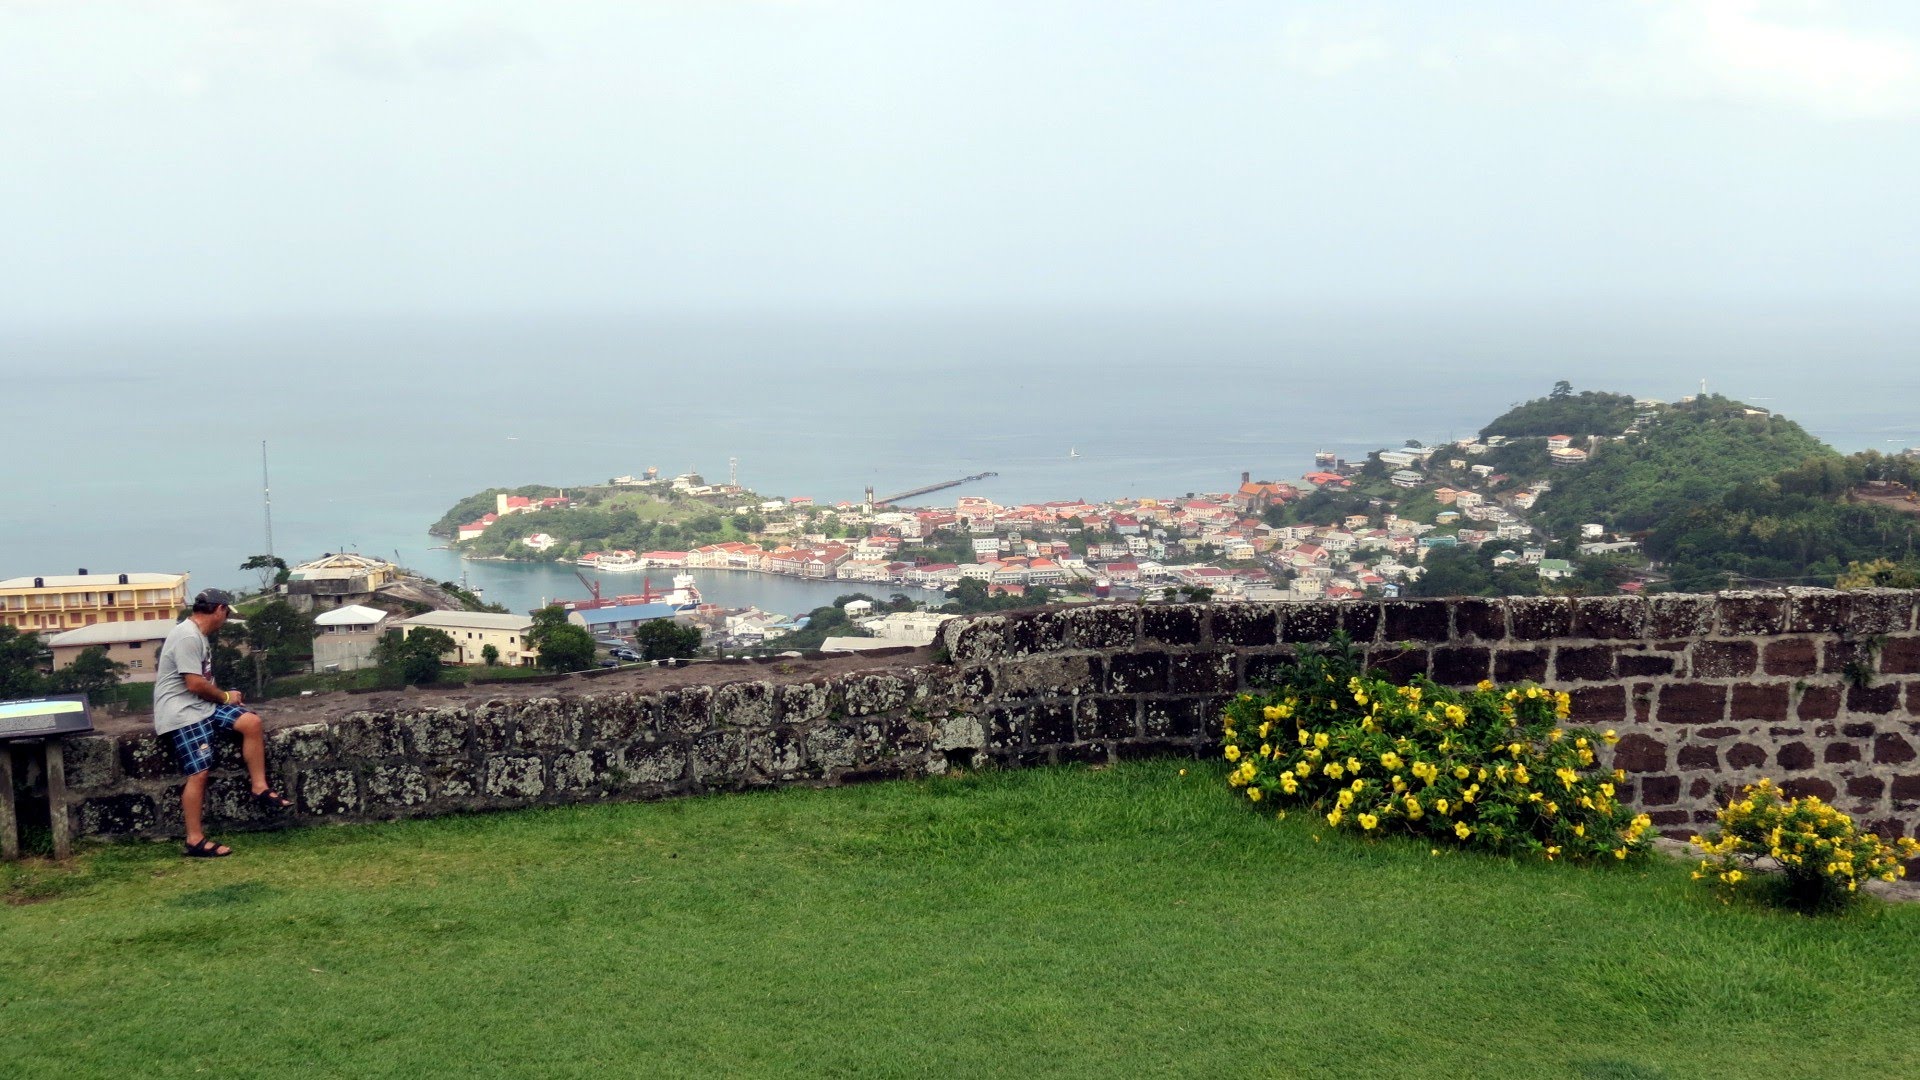 Grenada - 17 of 21 - Fort Frederick - YouTube